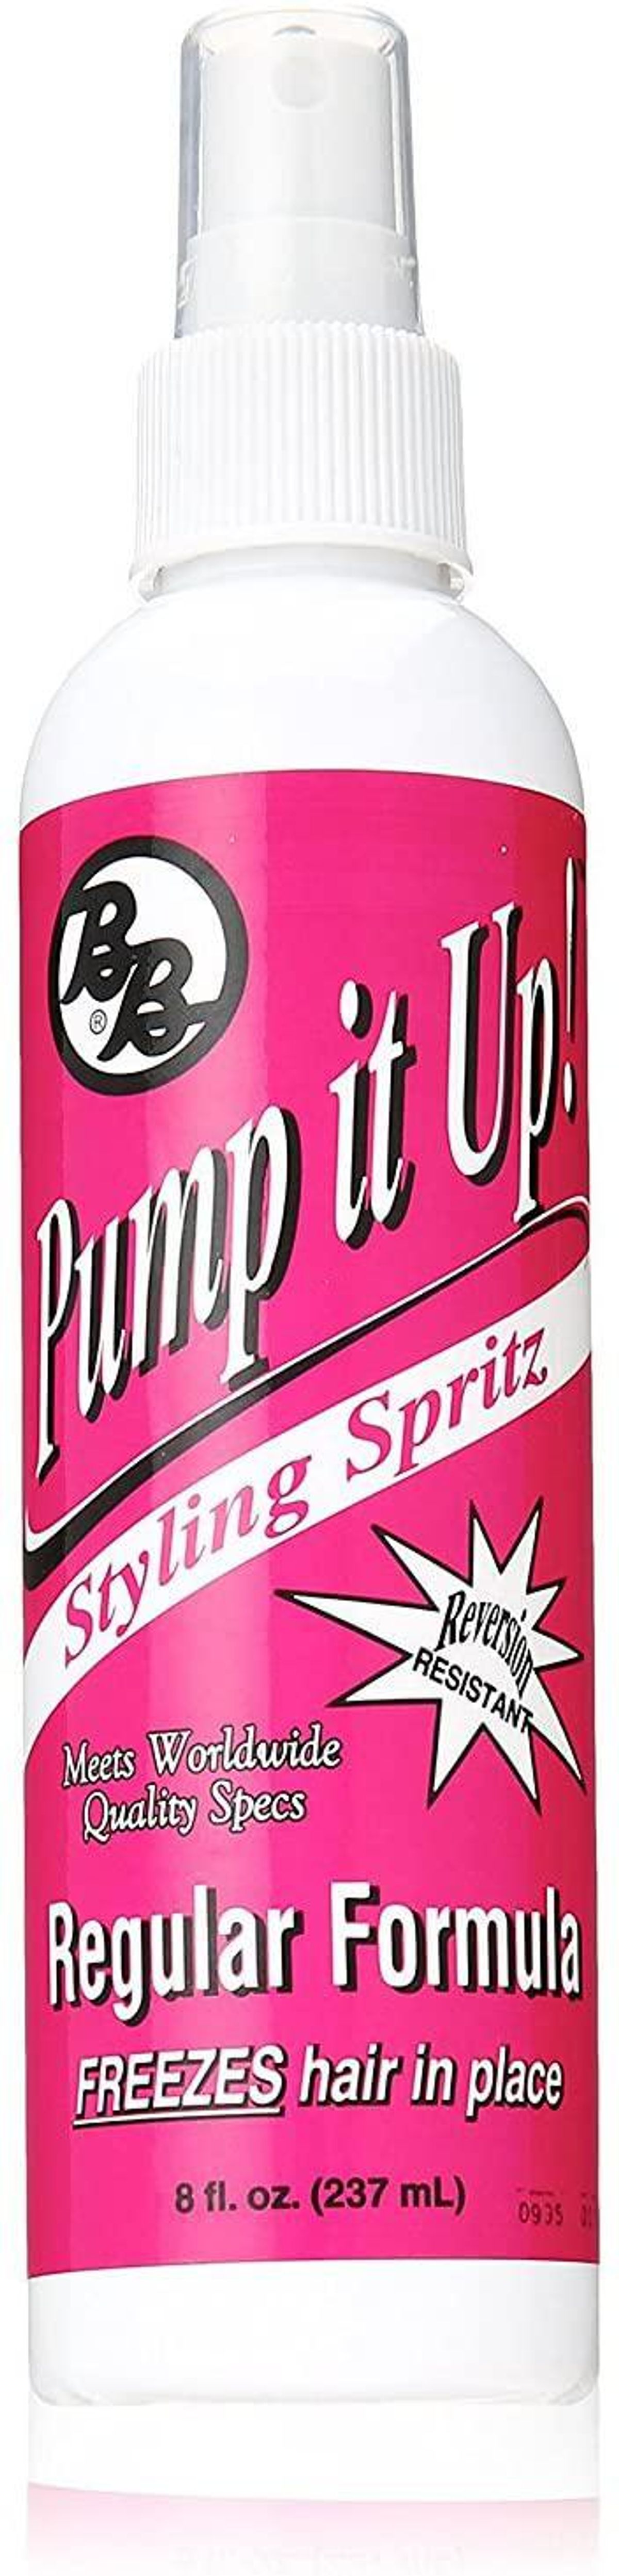 bb pump it up styling spritz